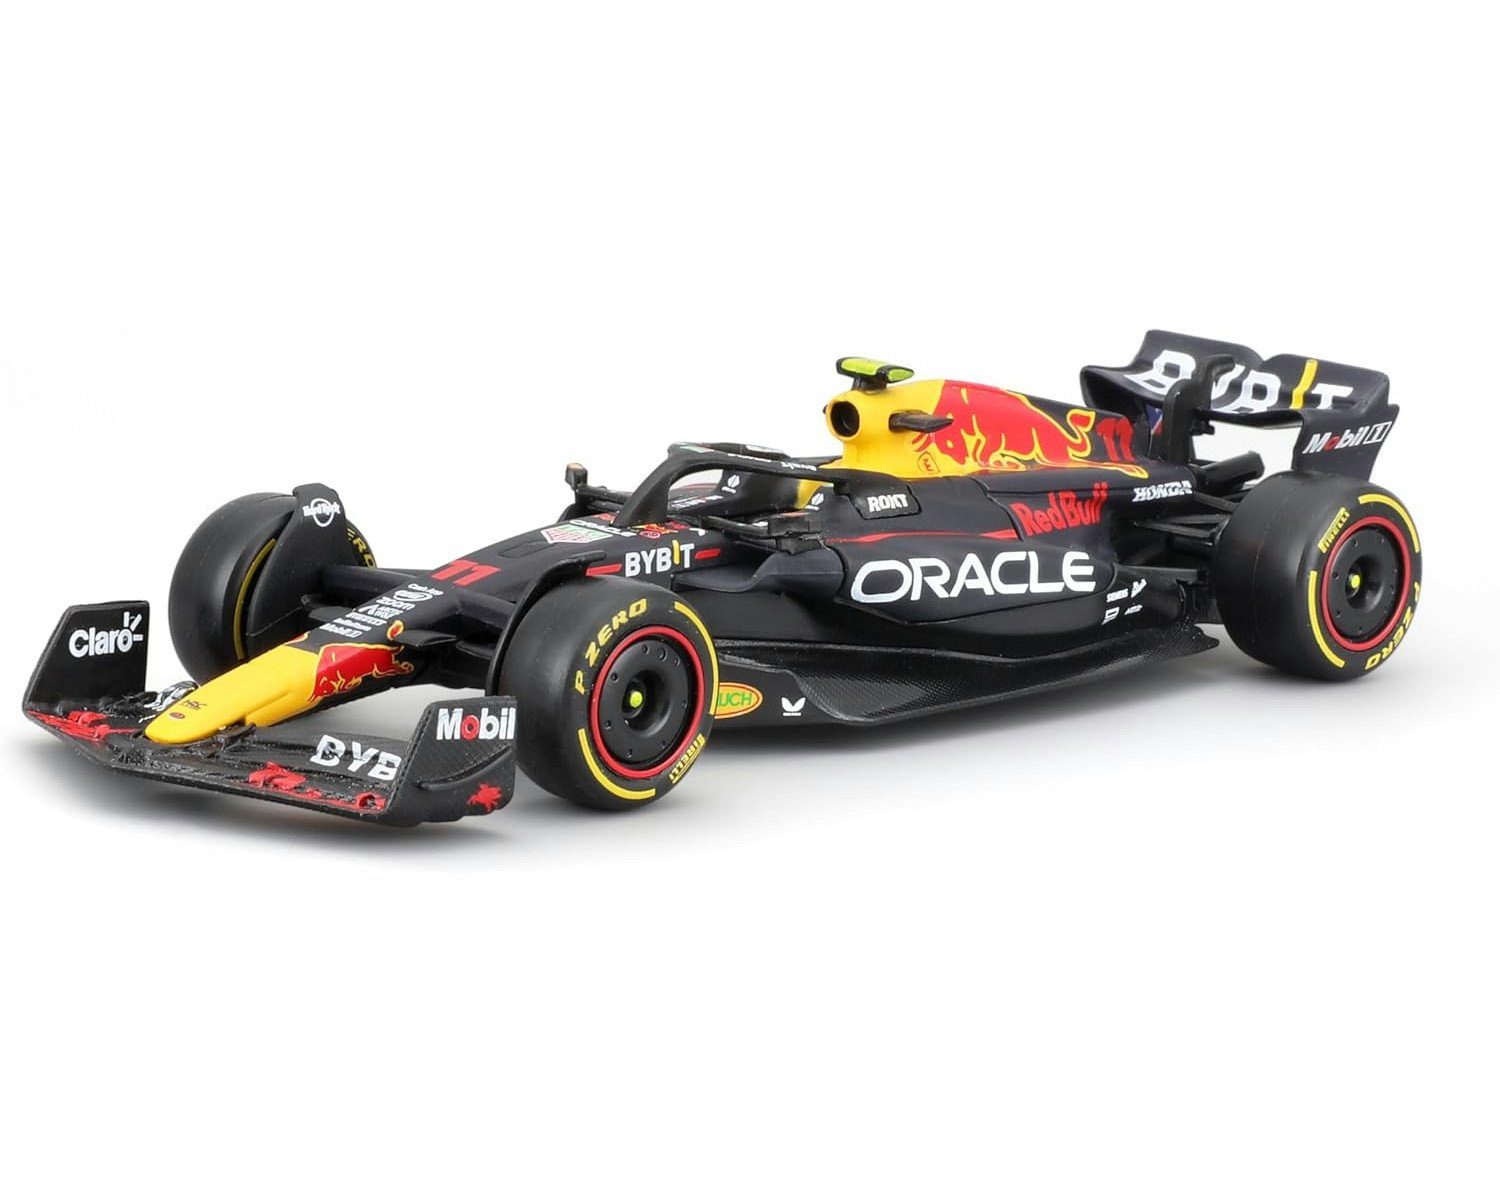 Bburago Modellauto Red Bull Racing F1 RB19 Perez #11, Maßstab 1:43, originalgetreu